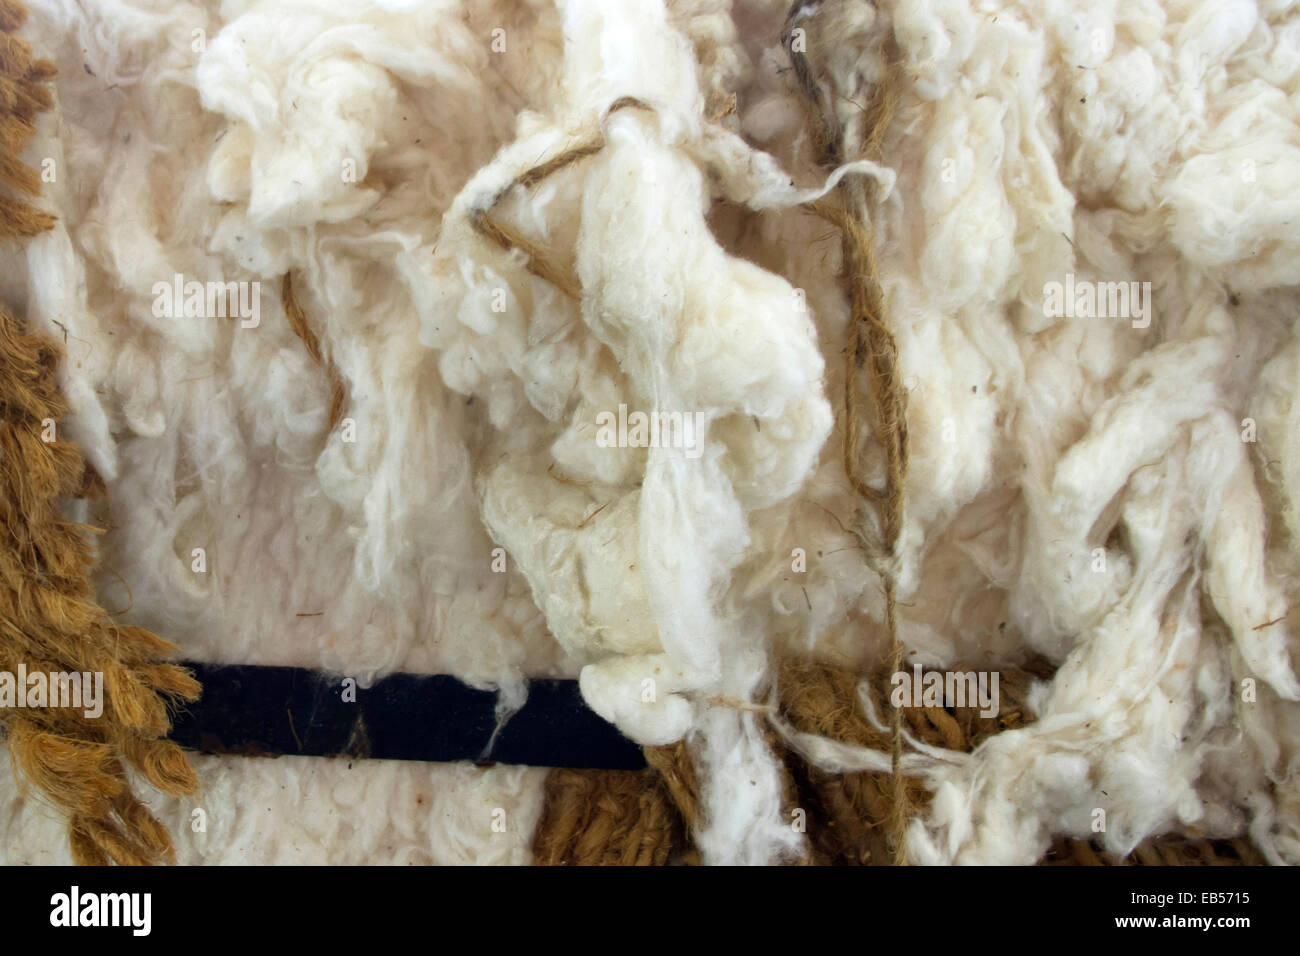 Bale of raw, unprocessed cotton Stock Photo